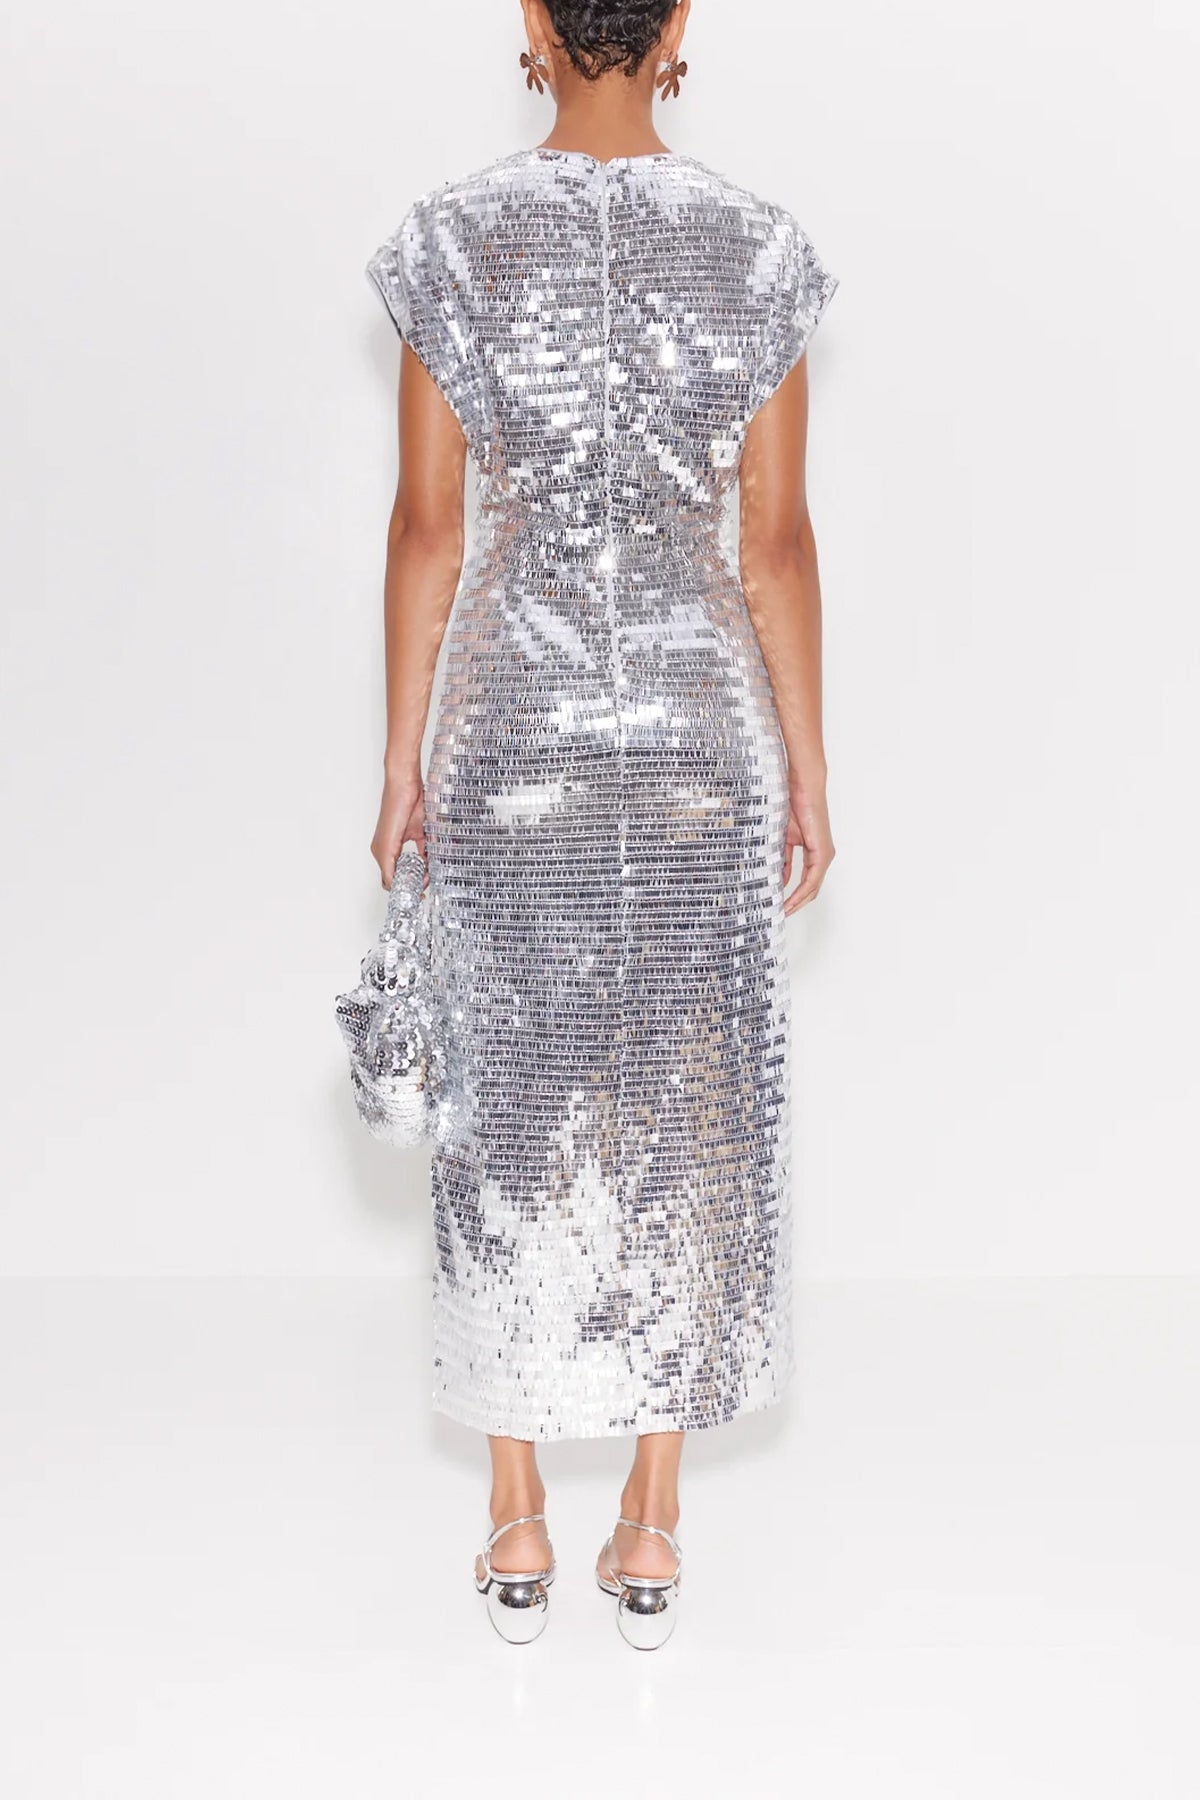 Argan Sequin Dress in Satellite Silver - shop - olivia.com